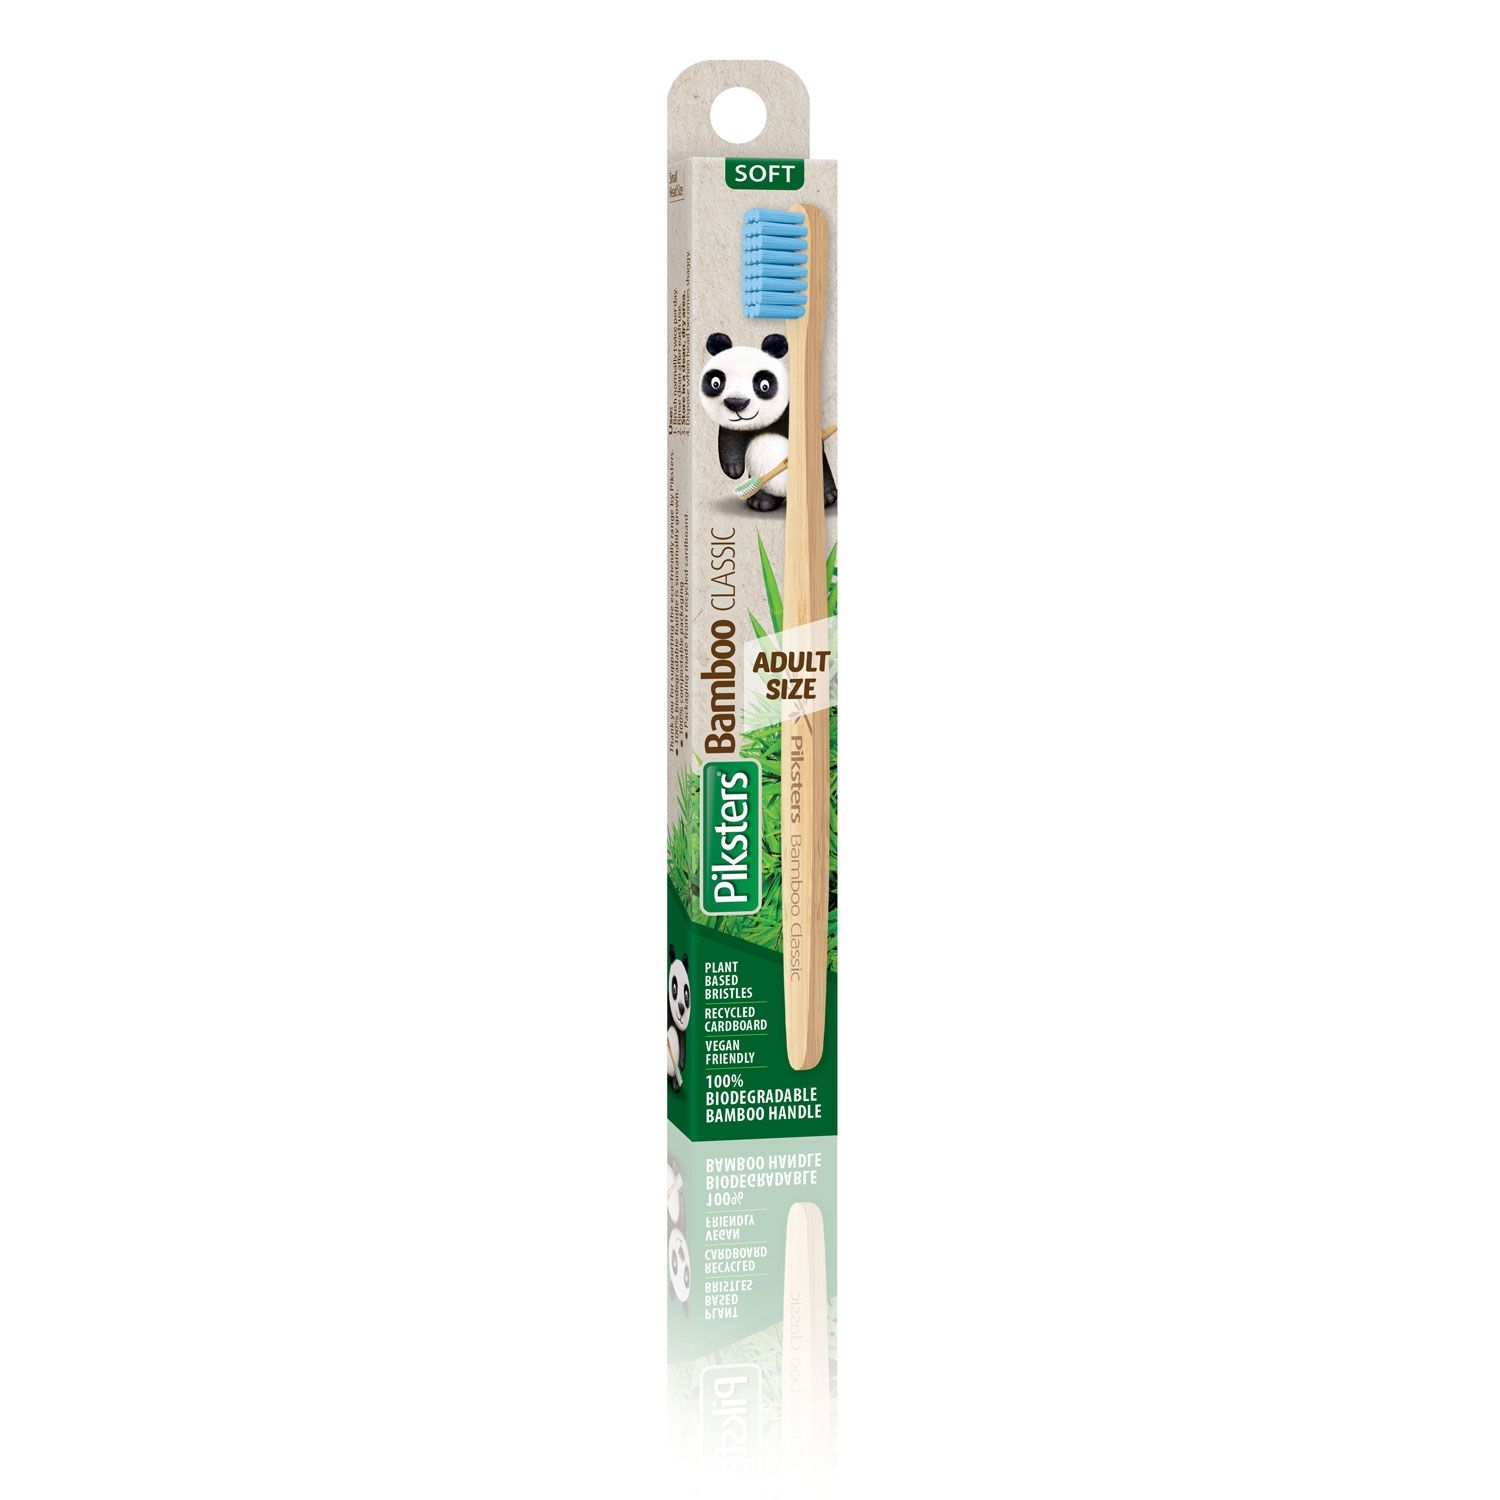 参比制剂,进口原料药,医药原料药 Piksters Classic Adult Bamboo Toothbrush